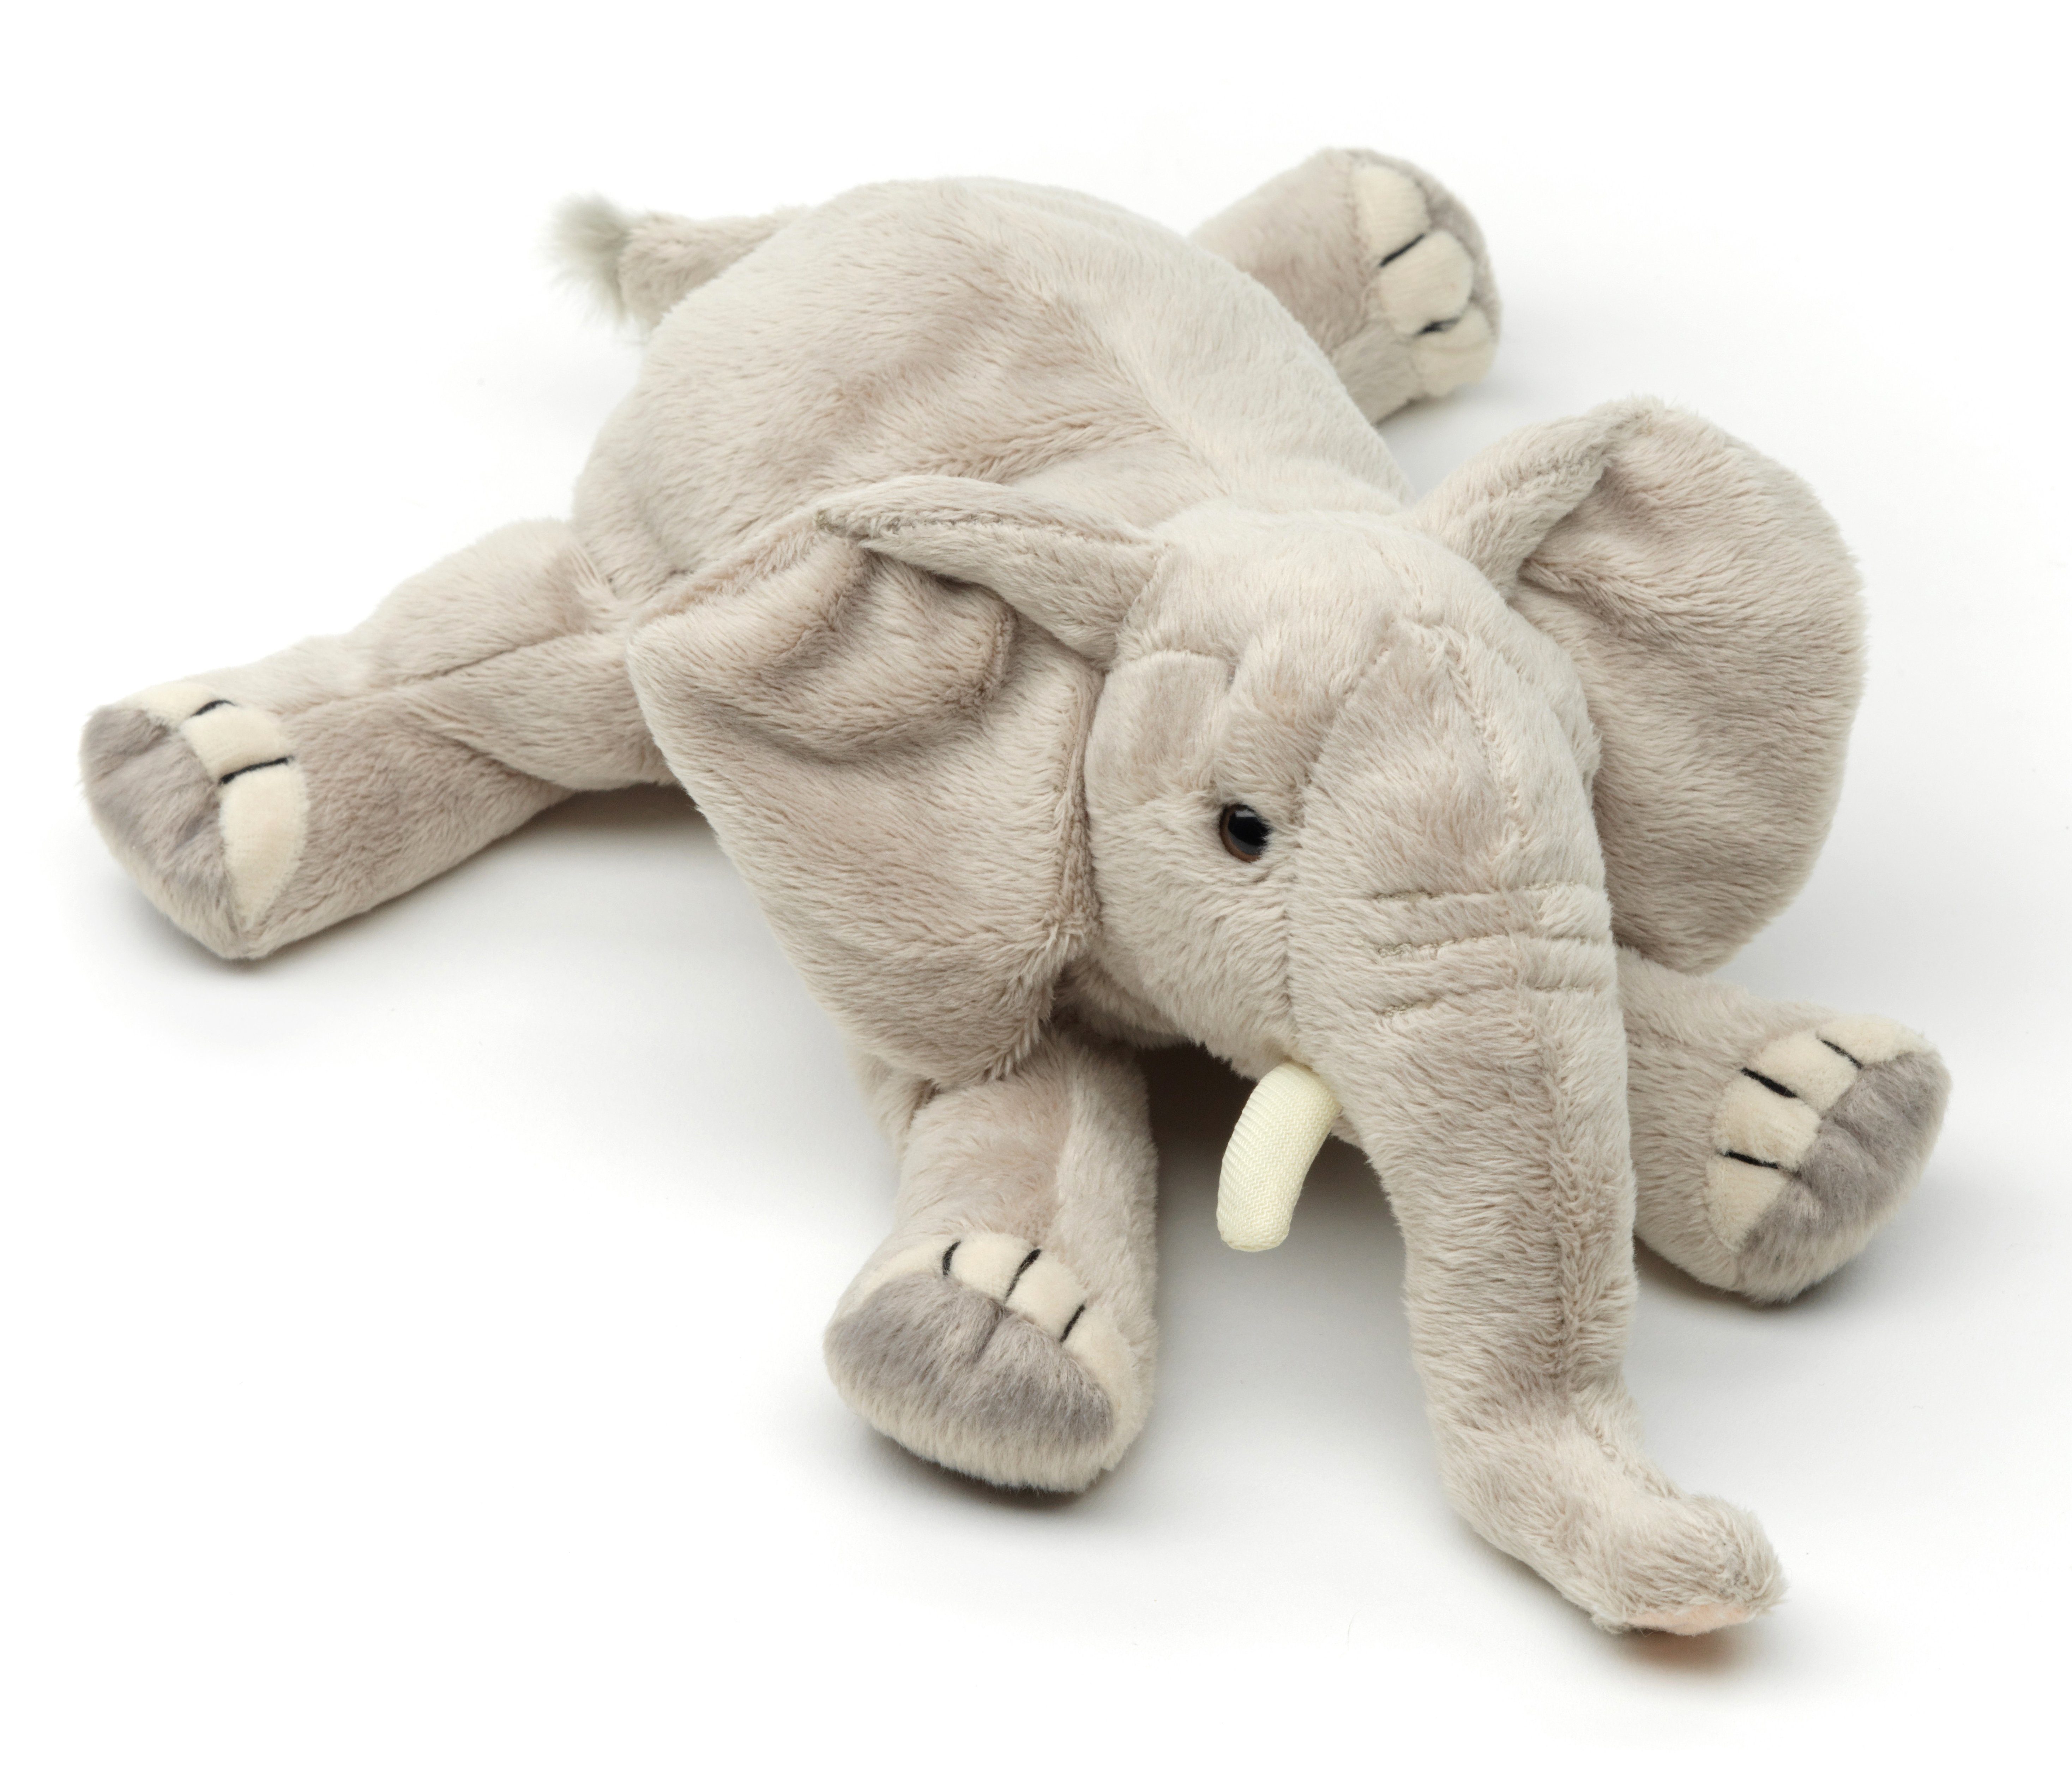 Uni-Toys Kuscheltier Elefant, liegend - 27 cm (Длина) - Plüsch-Elefant - Plüschtier, zu 100 % recyceltes Füllmaterial